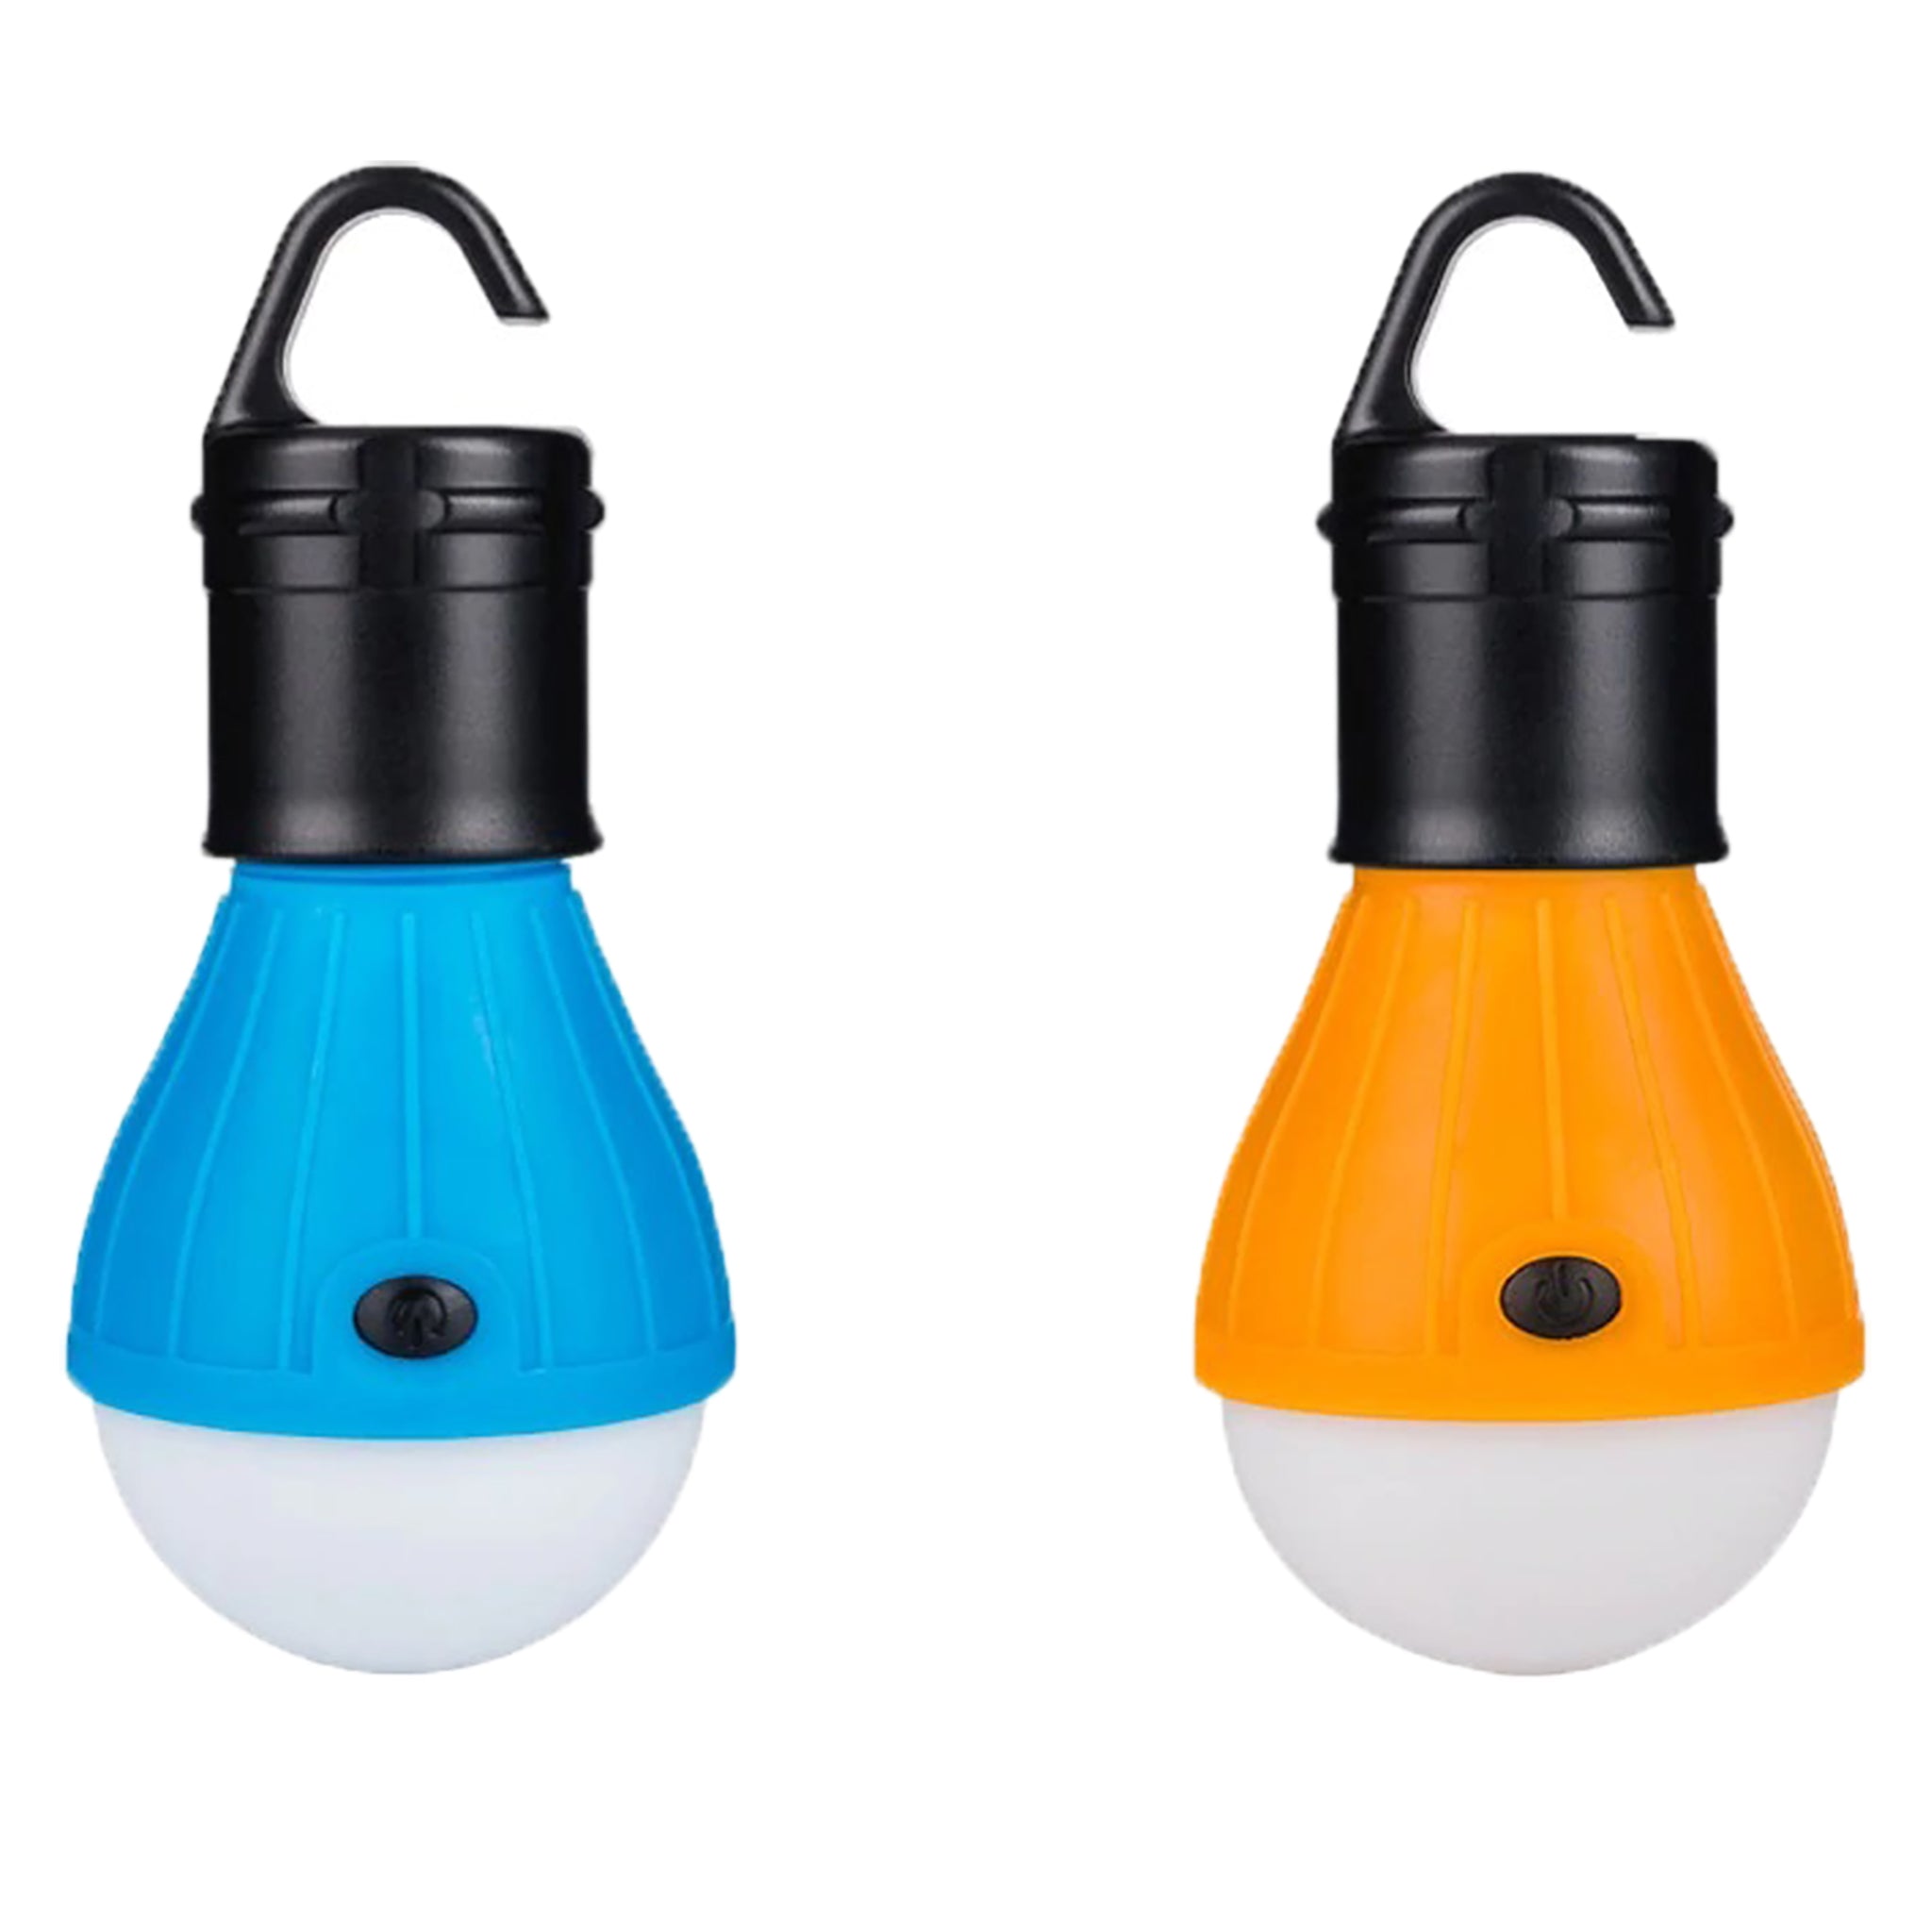 Charity - Portable LED Lantern | Waterproof Camping Light | Emergency Lamp